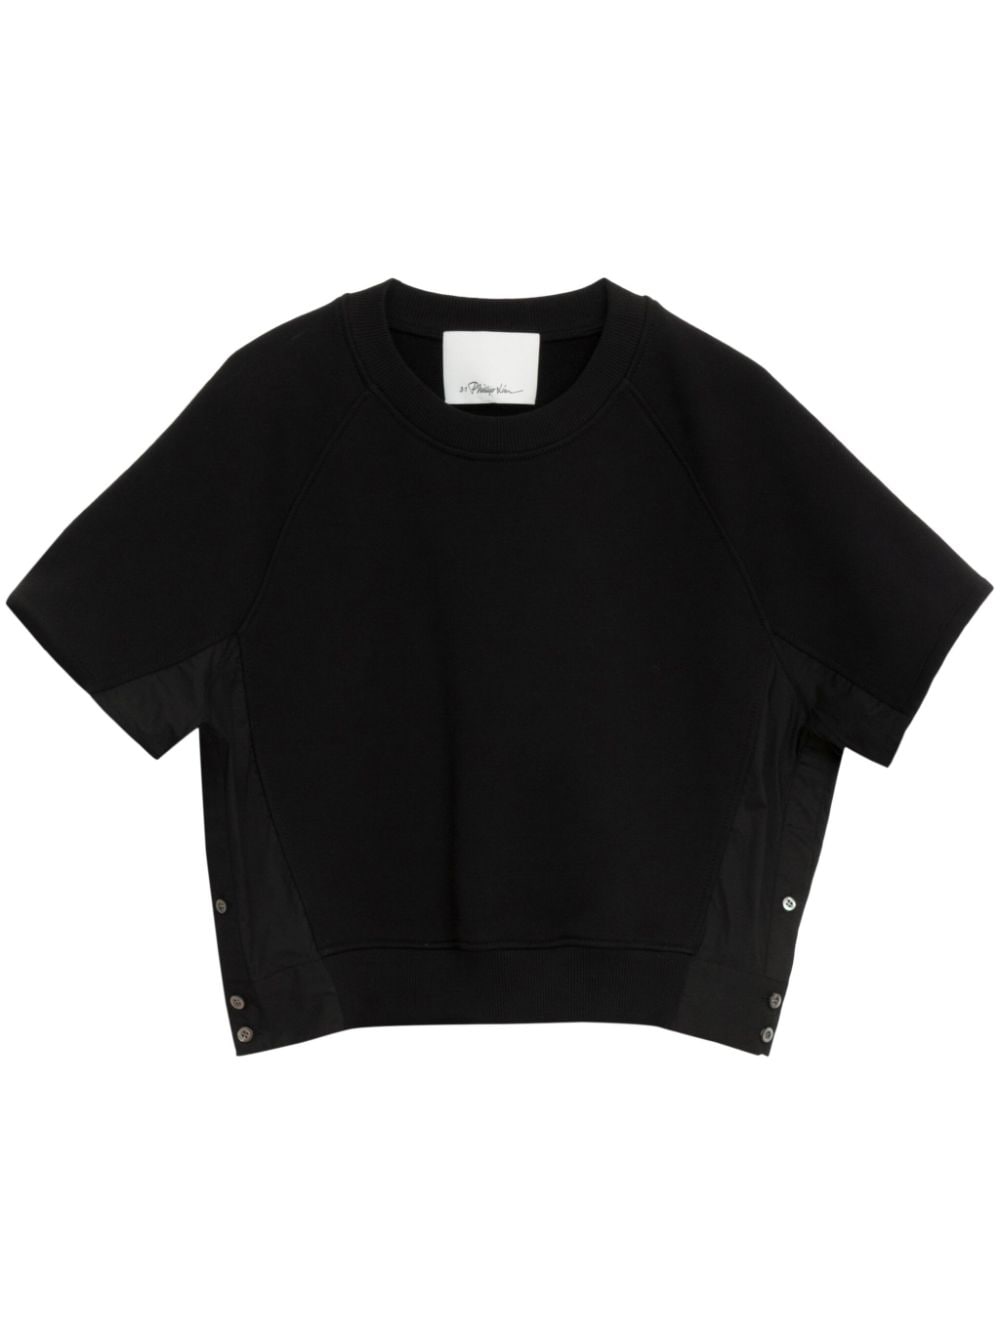 Image 1 of 3.1 Phillip Lim short-sleeve cotton sweatshirt